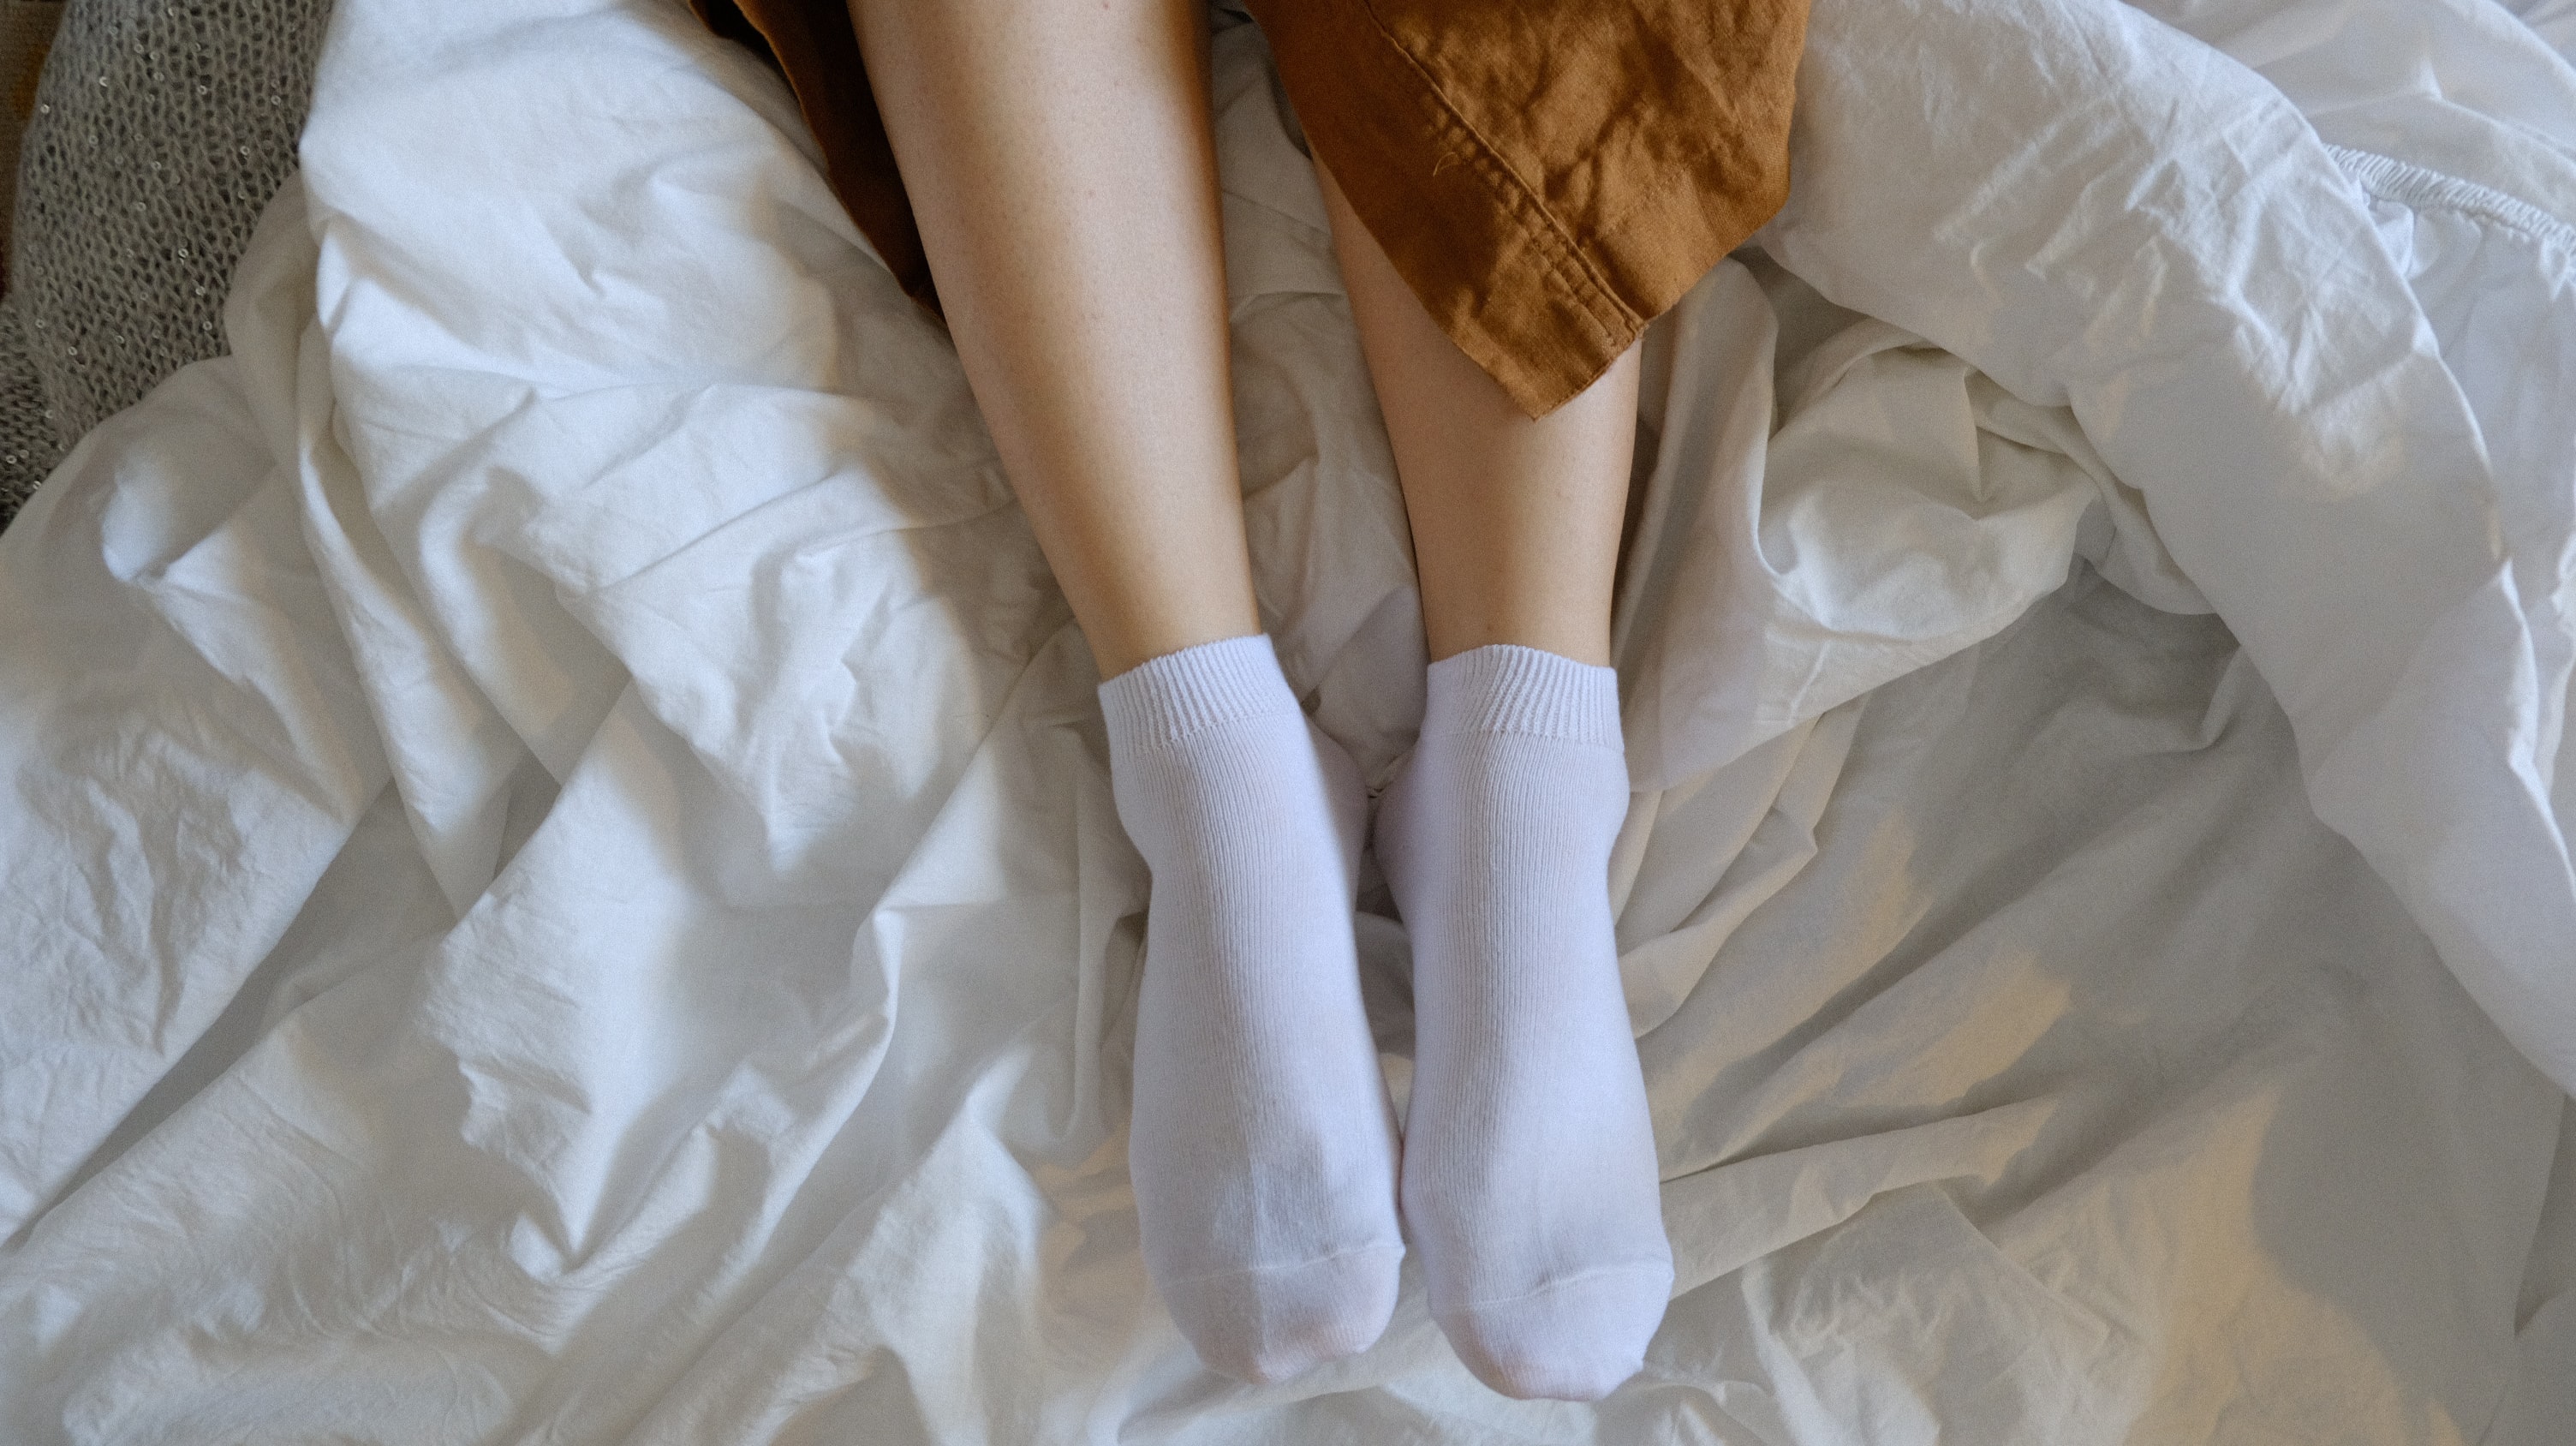 Белые носочки видео. Ножки в носочках. Женские ножки в носочках. Женские ножки в белых носочках. Белые носочки.